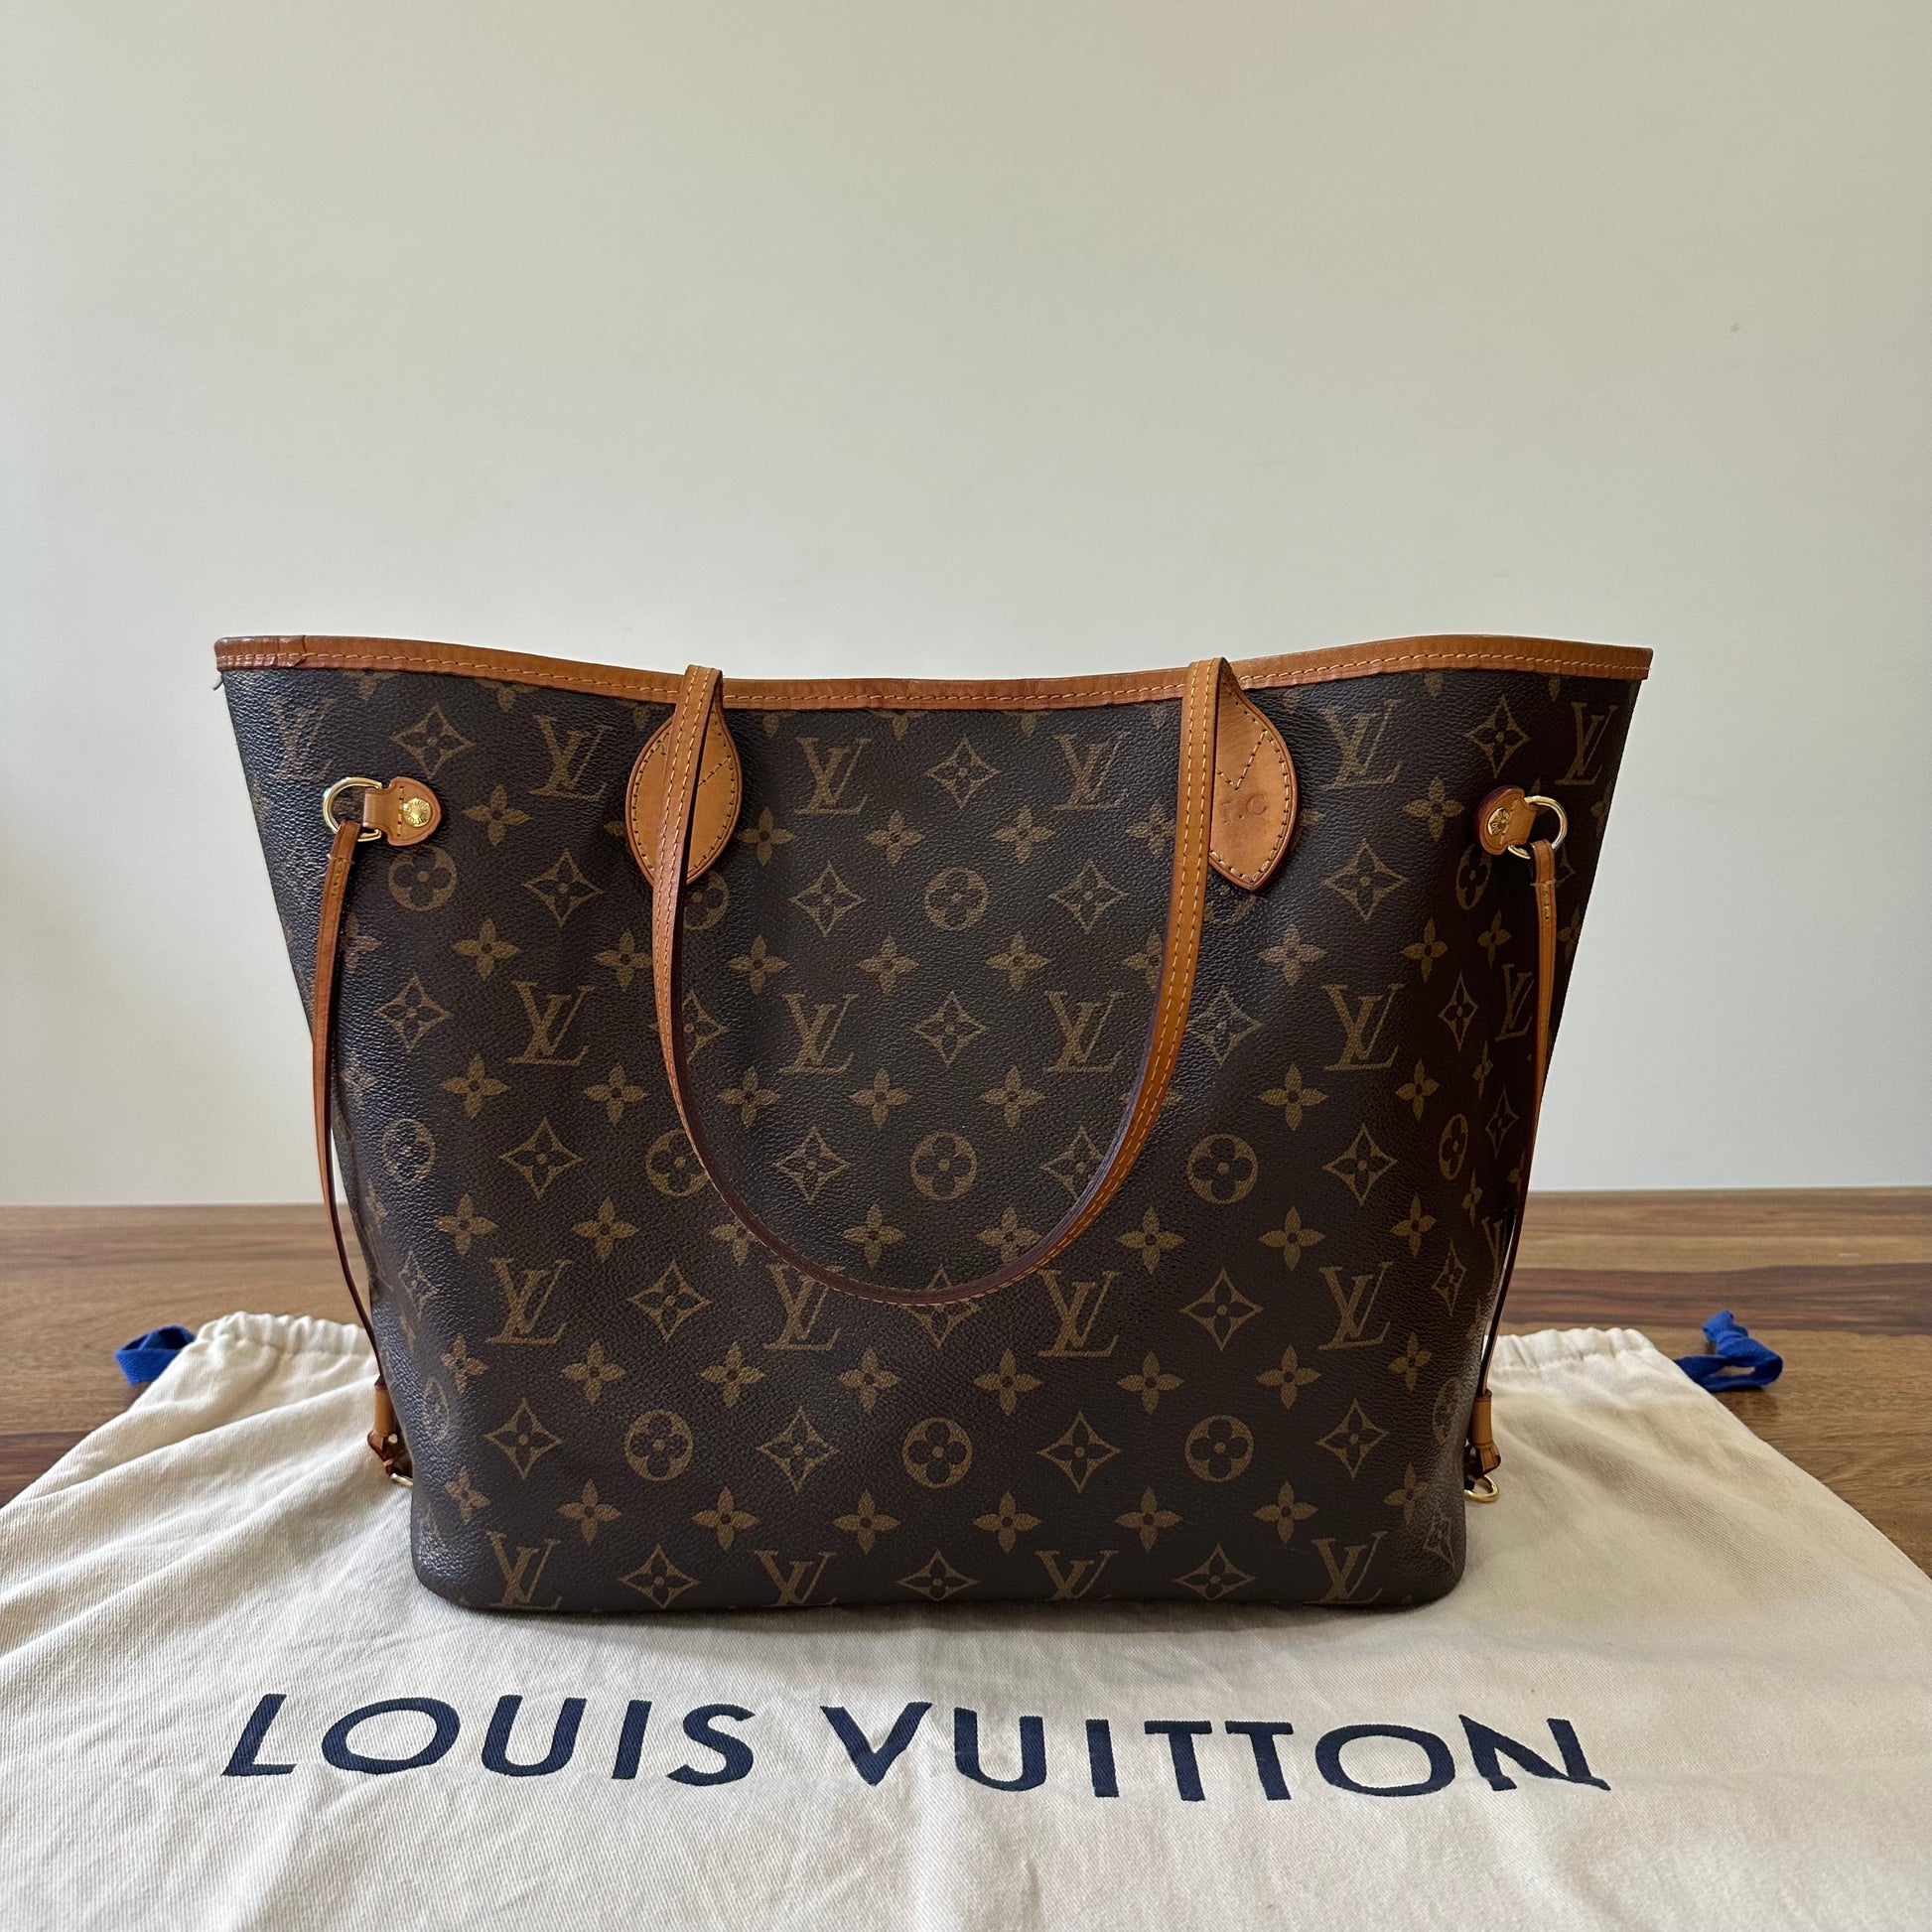 Louis Vuitton Lvxlol Monogram Neverfull mm